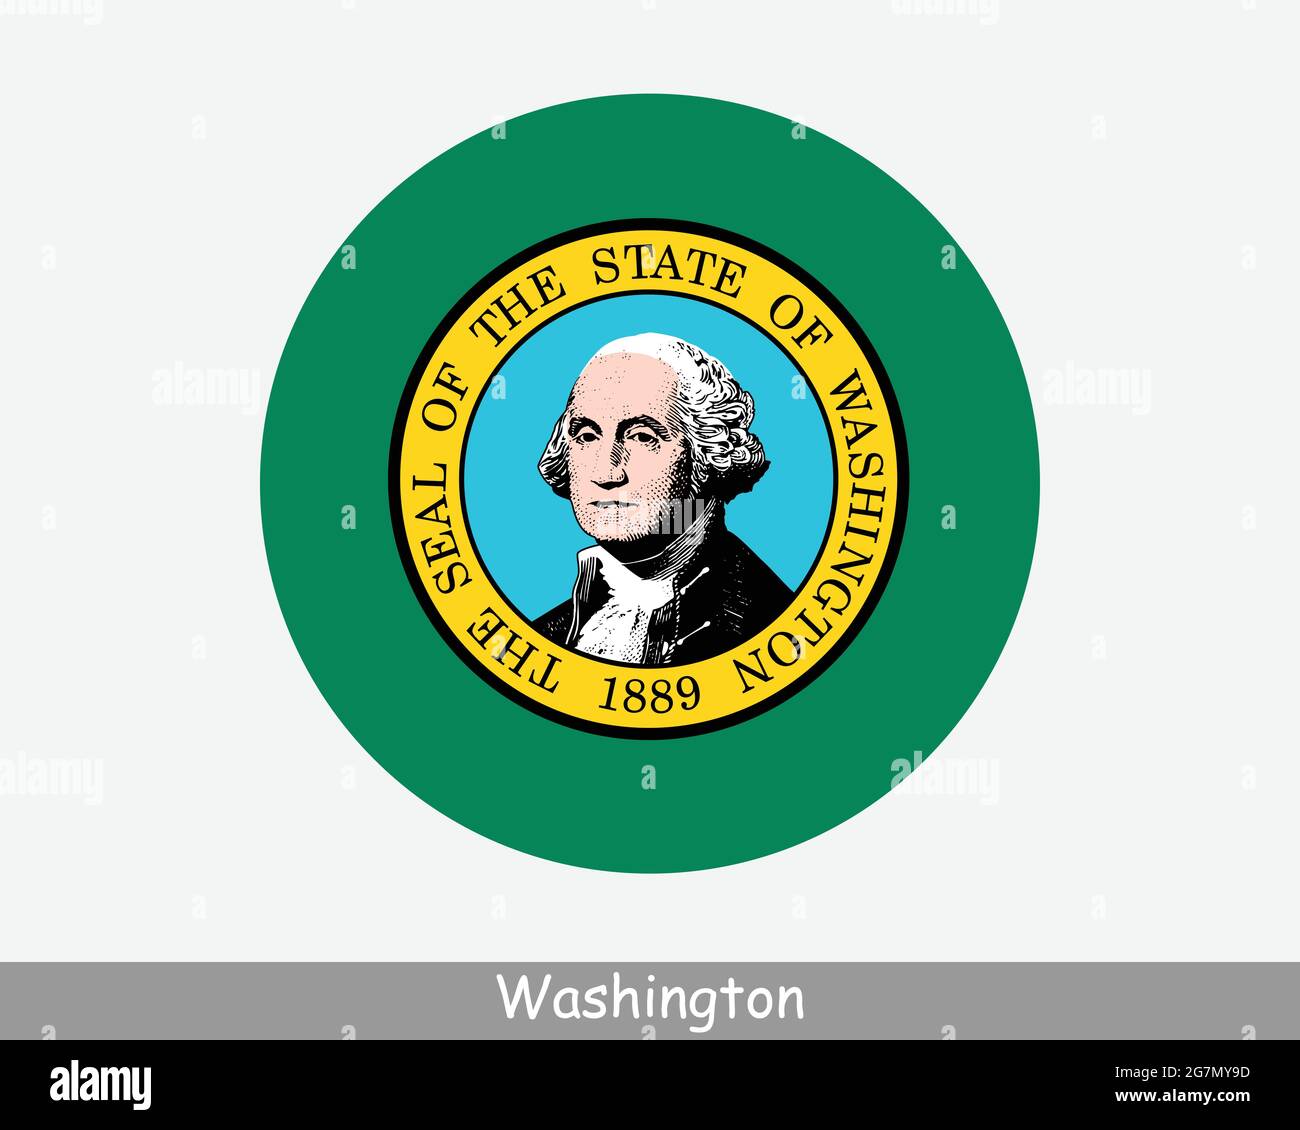 Washington Round Circle Flag. WA USA State Circular Button Banner Icon. Washington United States of America State Flag. The Evergreen State EPS Vector Stock Vector